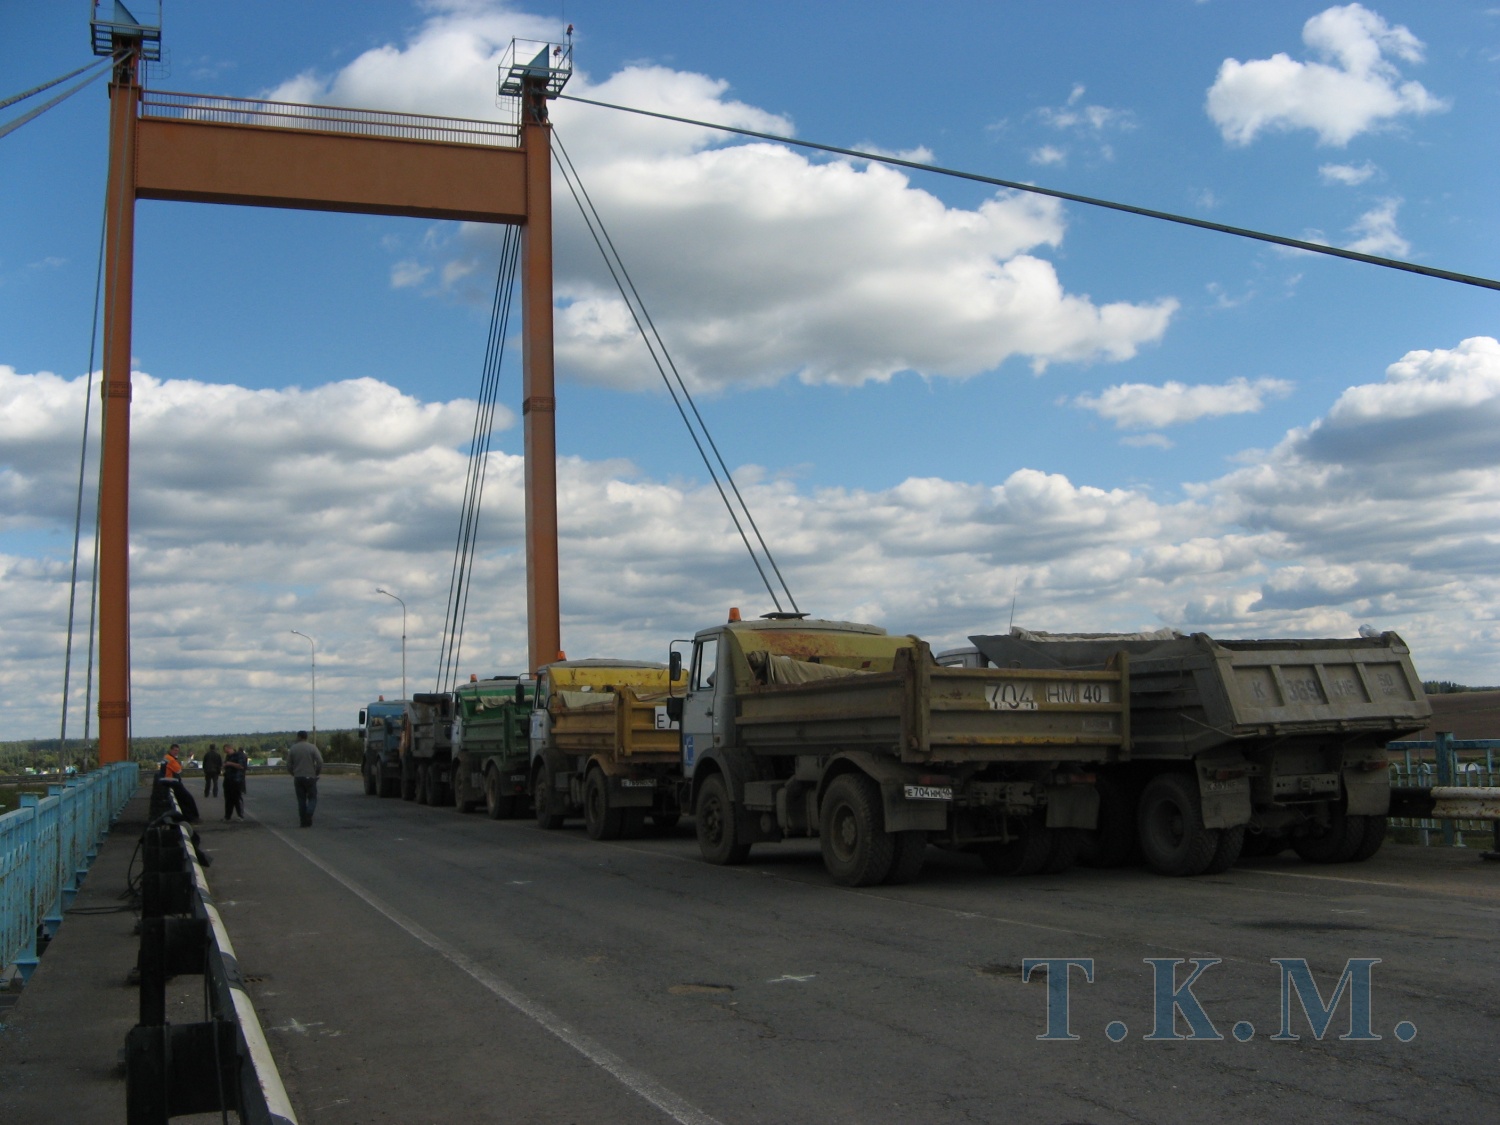 Вантовый мост на а/м М-3 «Украина» у г. Балабаново